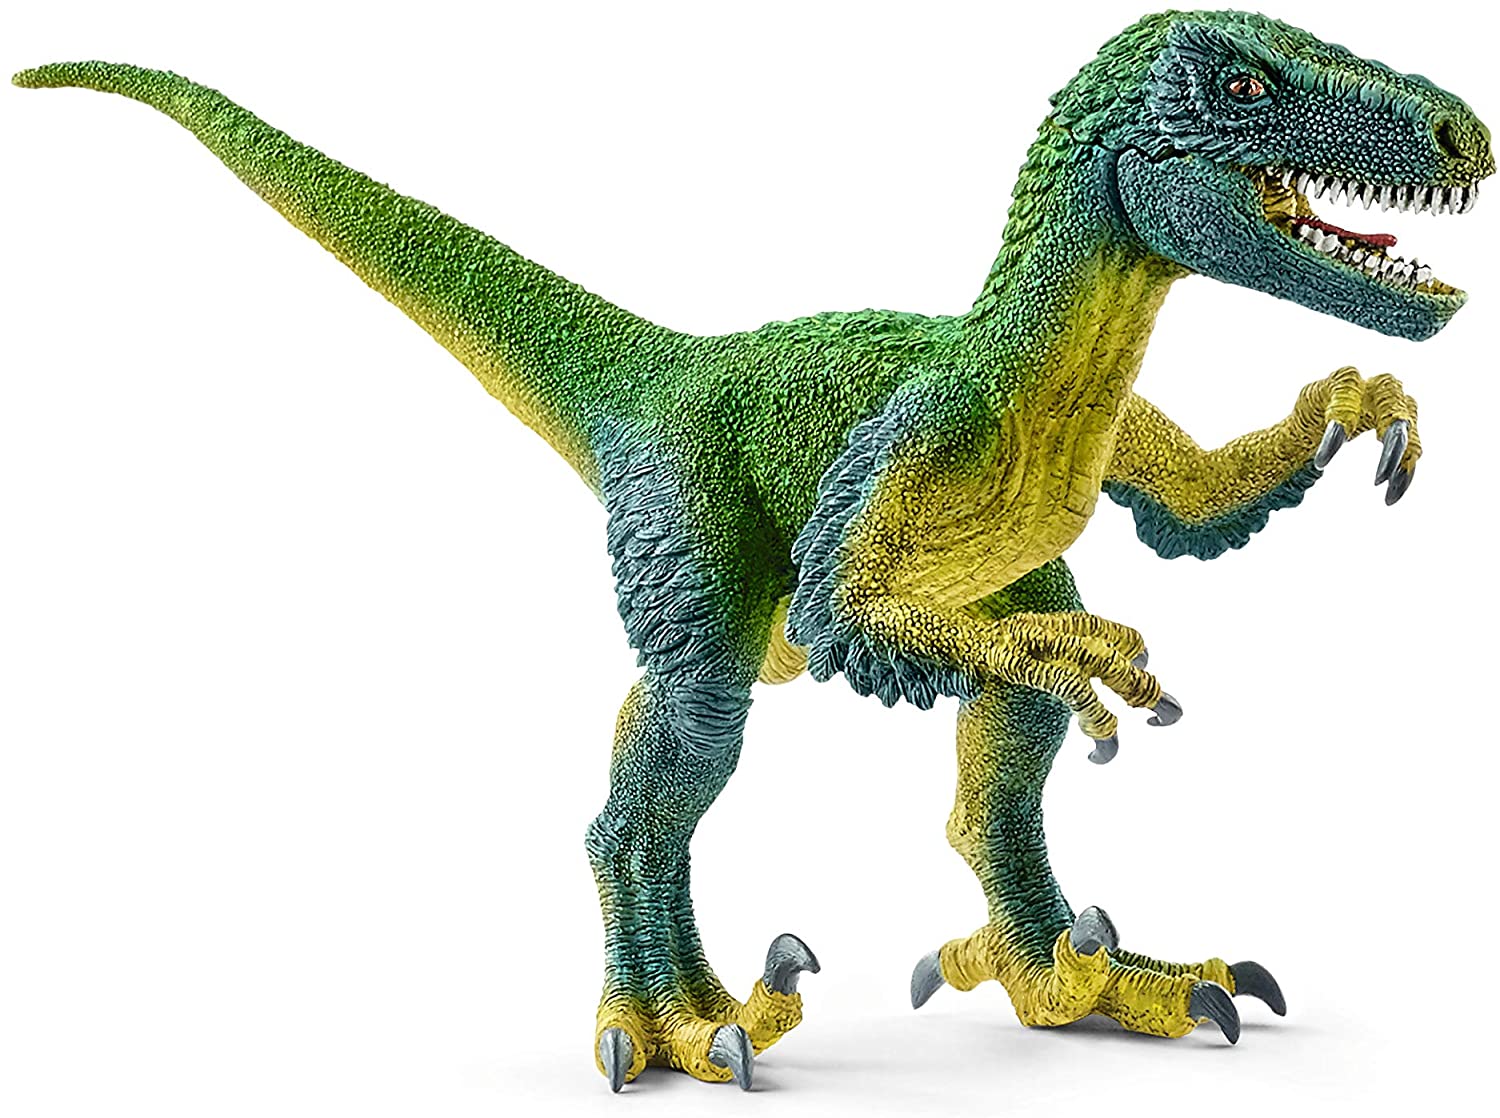 Schleich 14585 Velociraptor 6.4 X 18 X 10.4 Cm, Multi-Coloured